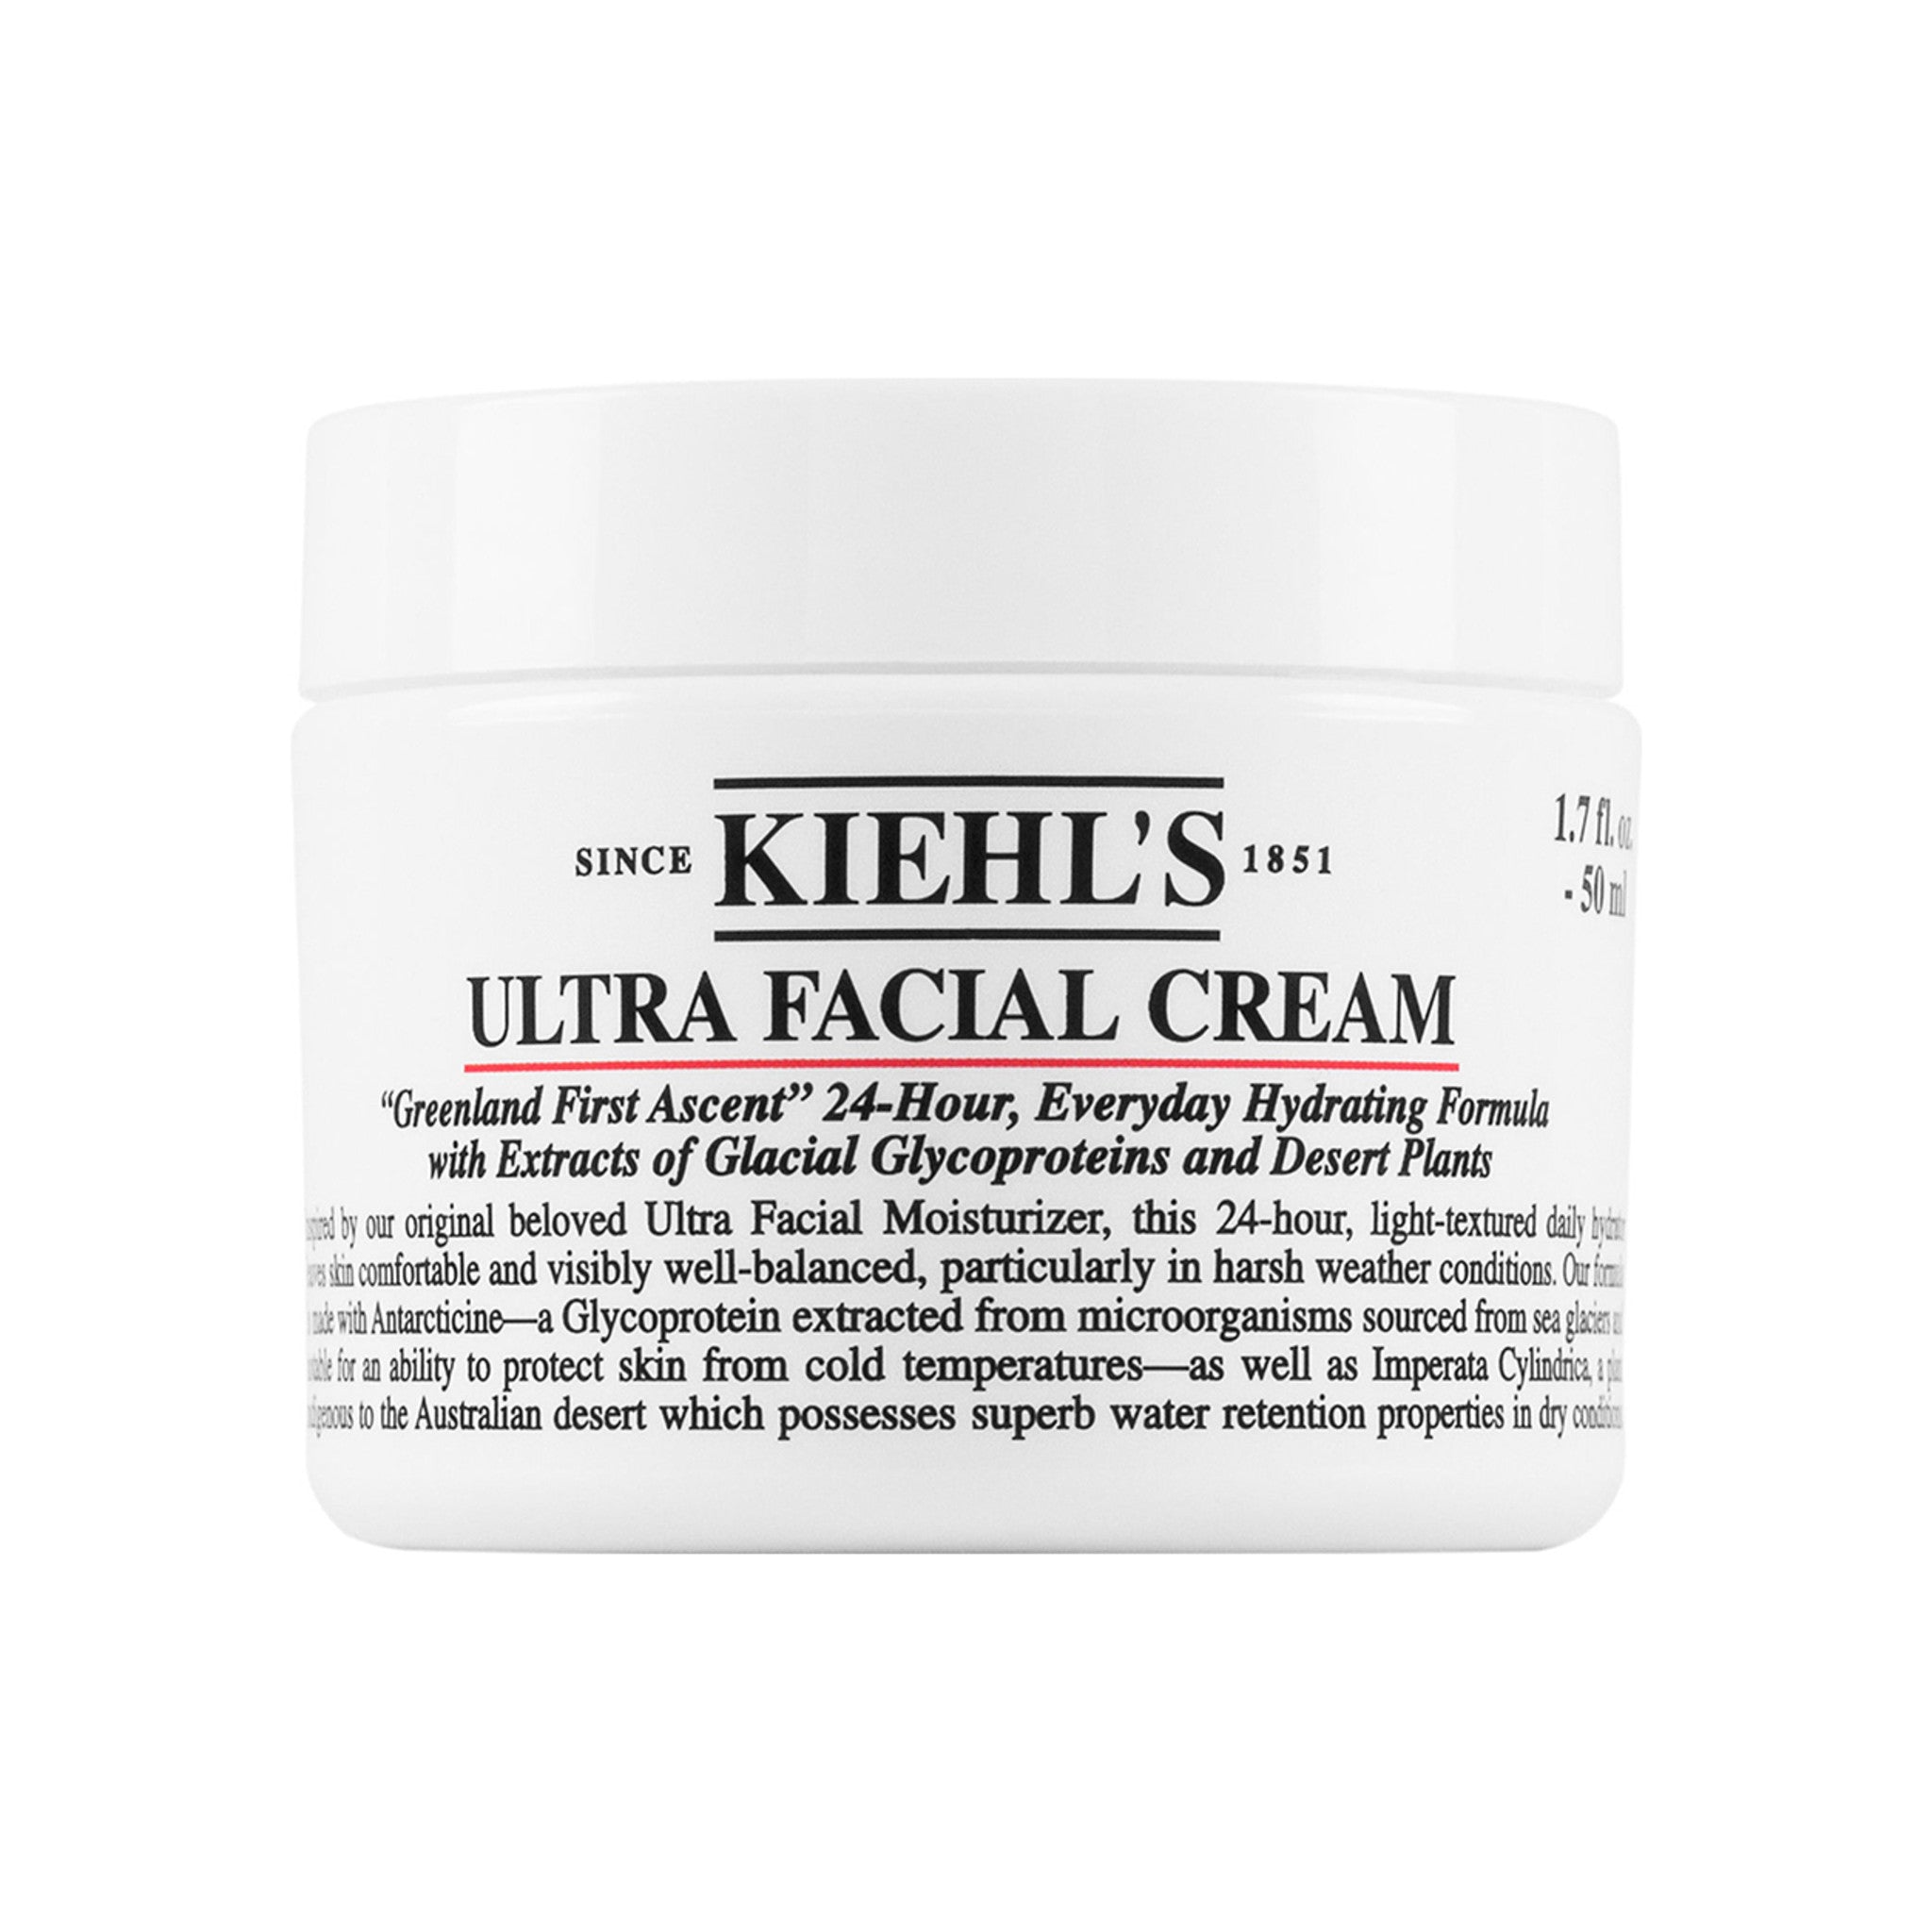 Kiehl's Since 1851 Ultra Facial Cream Size variant: 1.7 oz. main image.